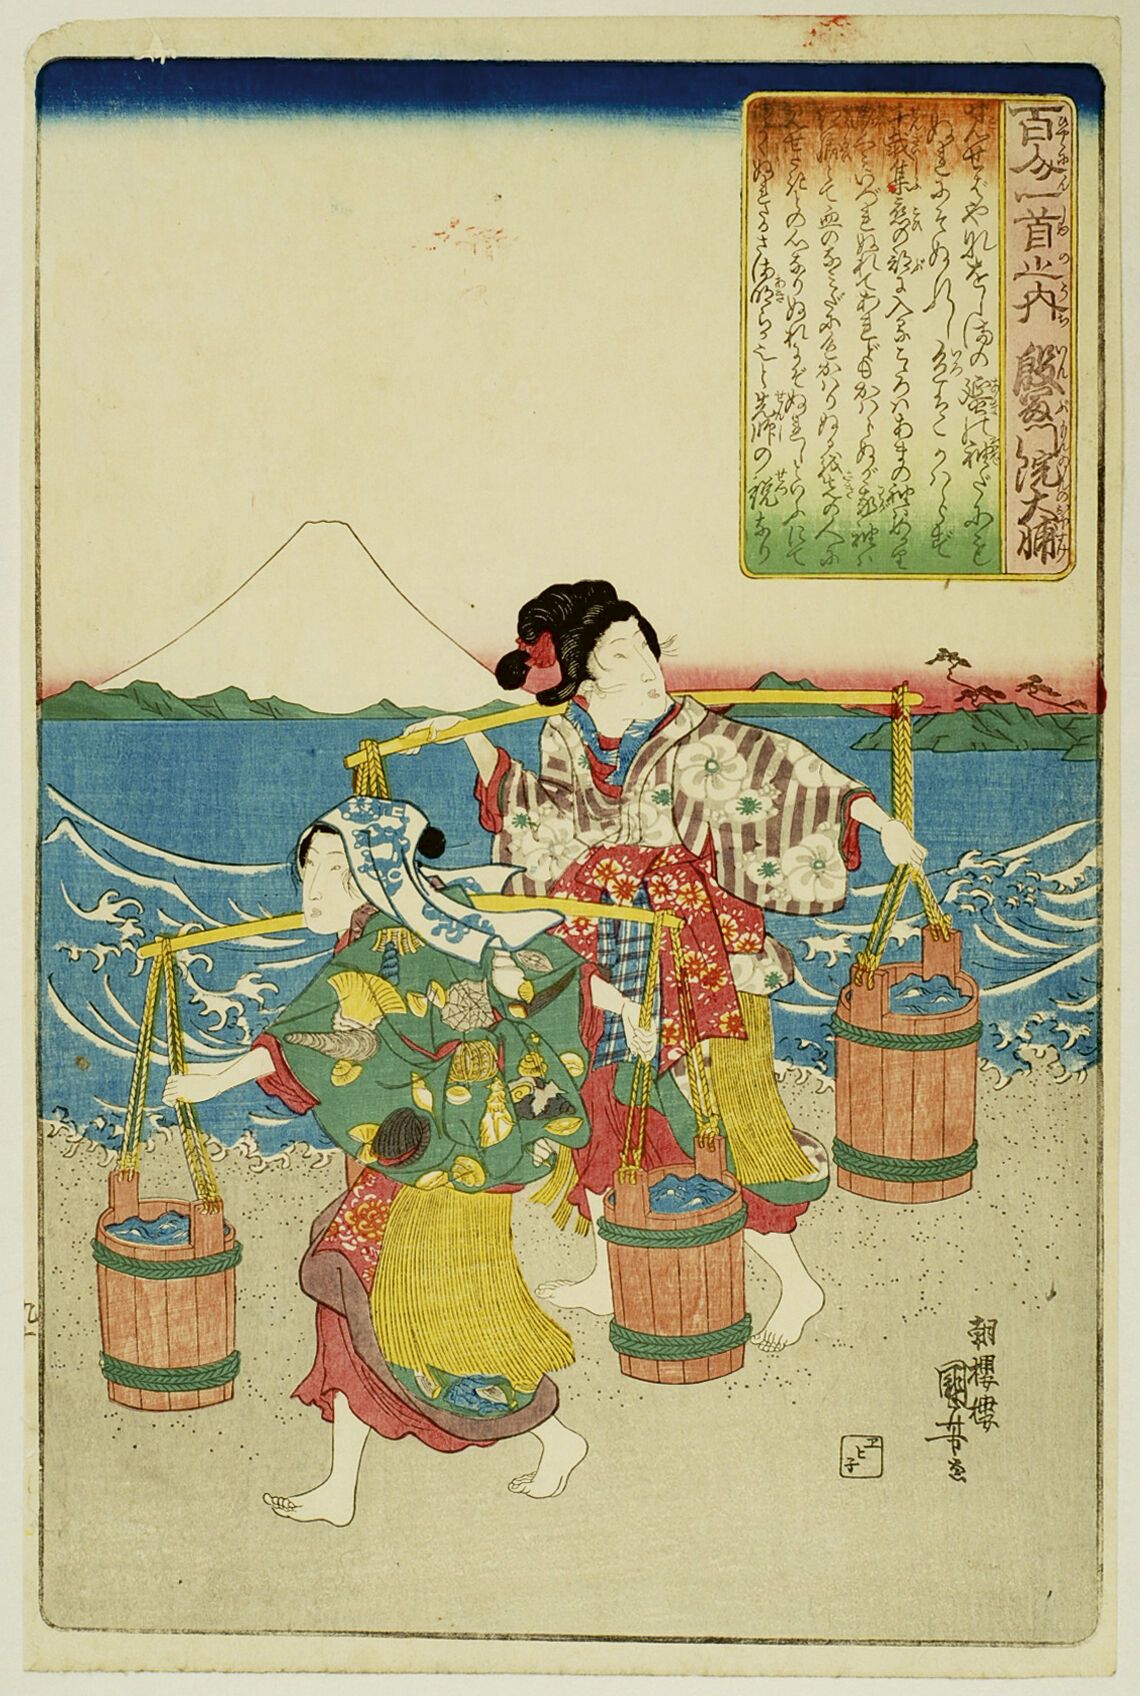 Null 宇都宫邦彦 (1797-1861)
百人一首》系列中的 "大板"（Oban tate-e），板块为 "Jimpu-monin-no-ôsuke"，两个&hellip;